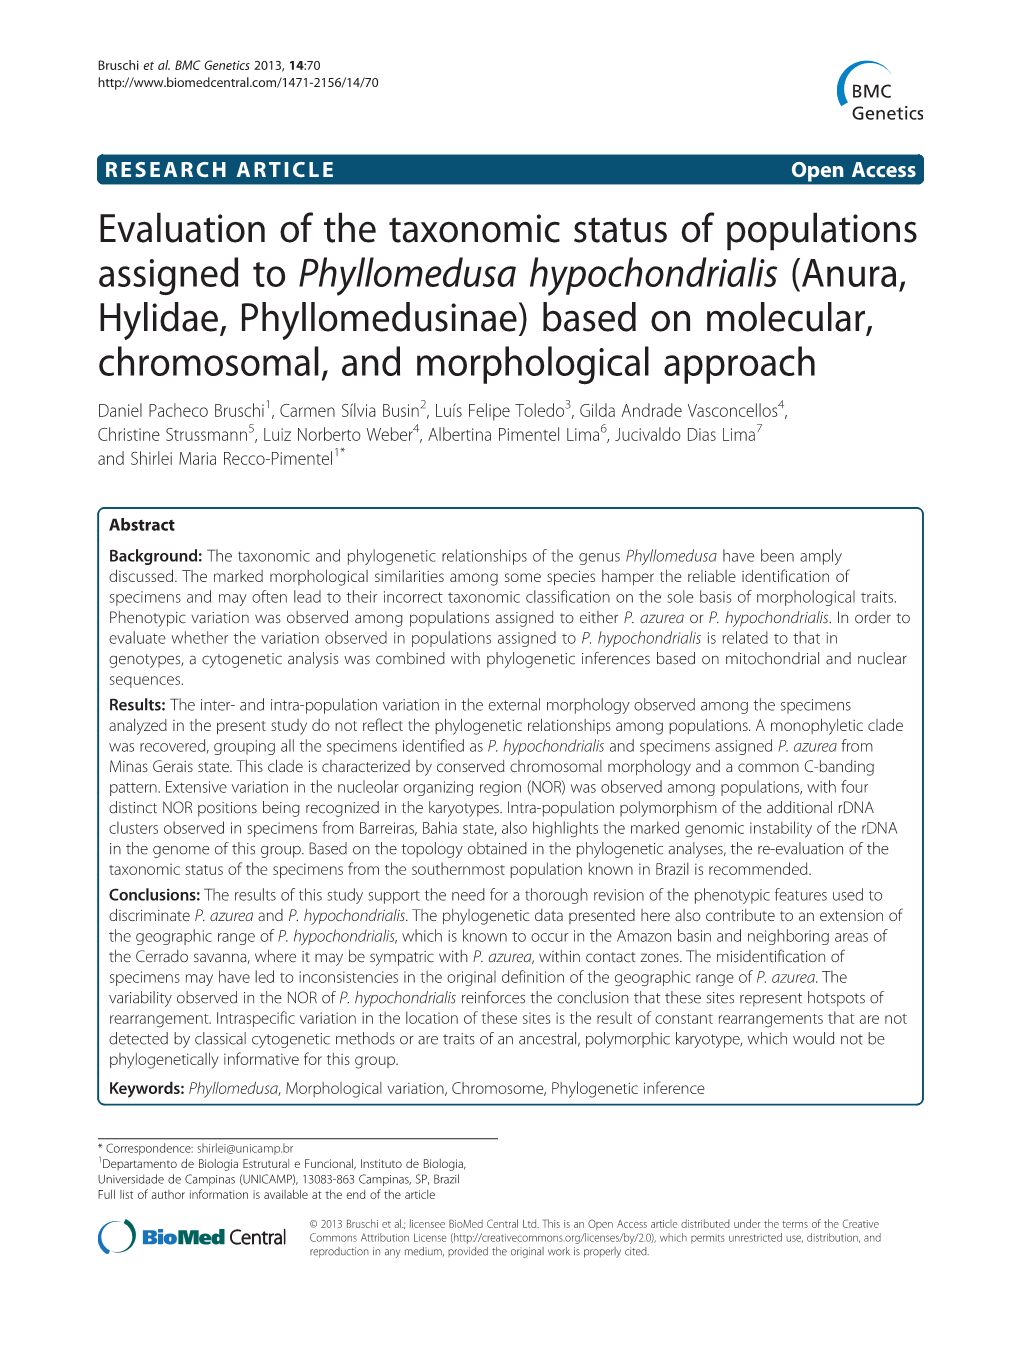 Evaluation of the Taxonomic Status of Populations Assigned to Phyllomedusa Hypochondrialis (Anura, Hylidae, Phyllomedusinae) Based on Molecular, Chromosomal, and Morphological